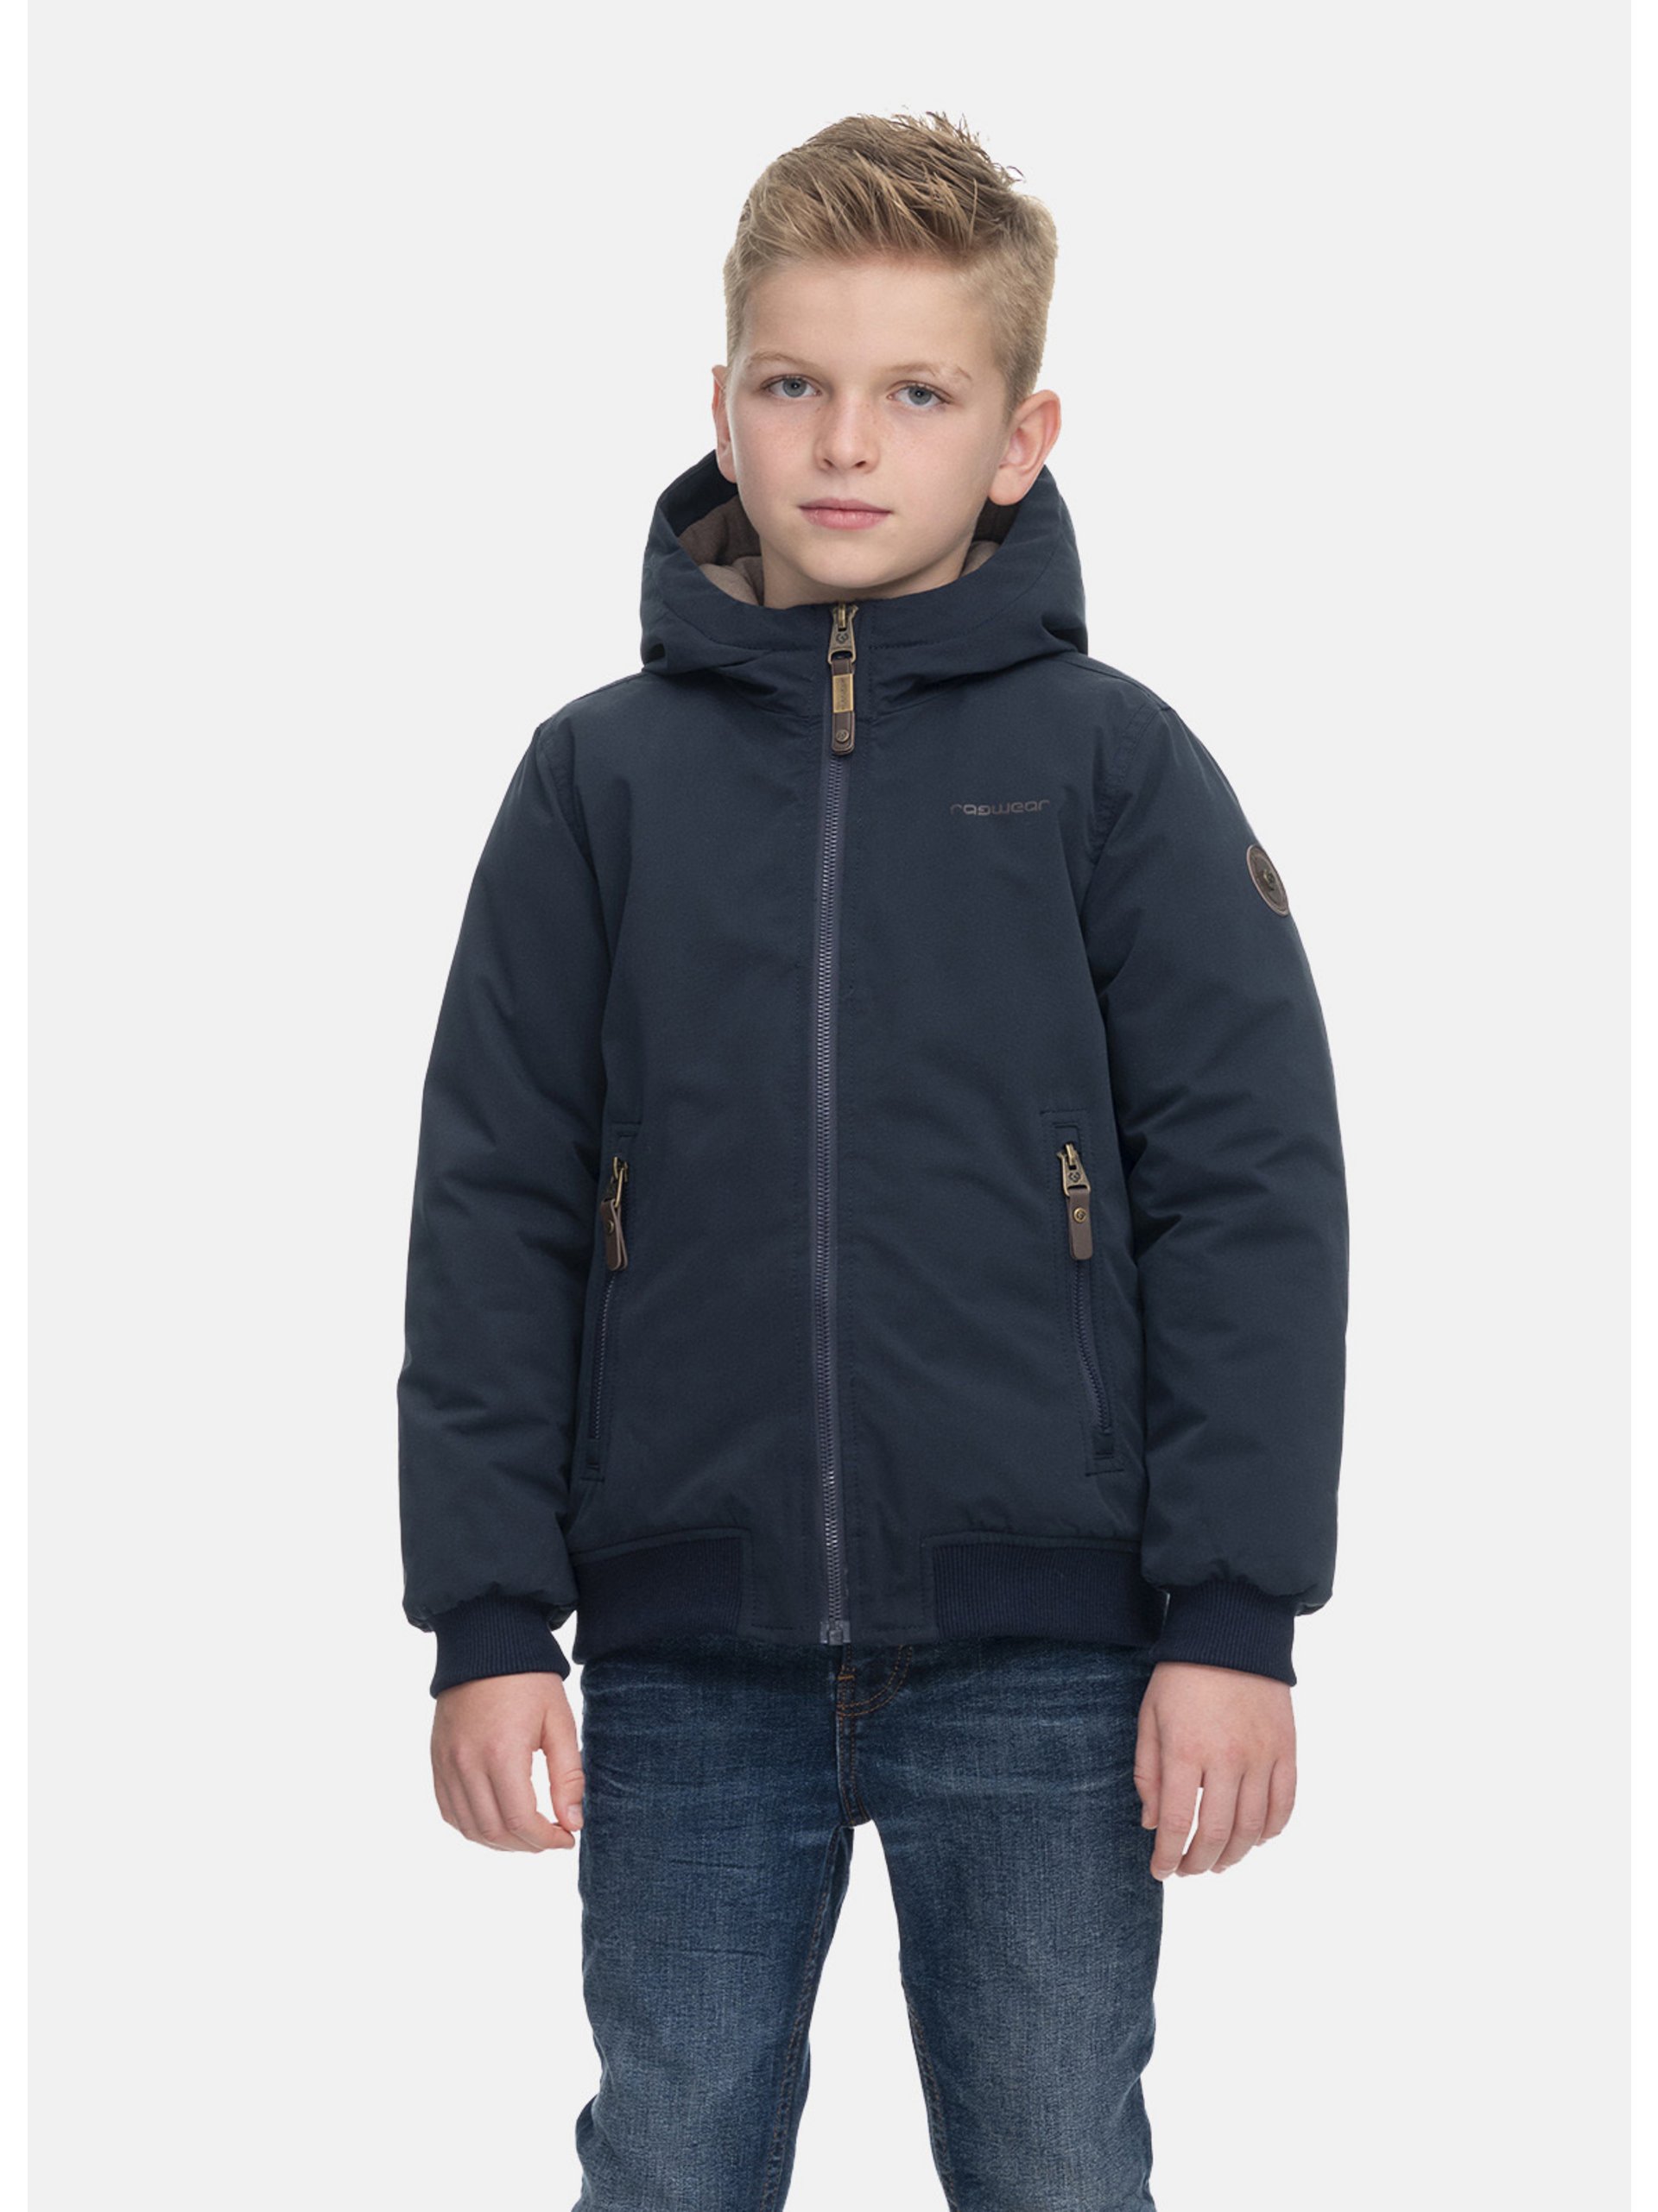 Ragwear Jungen Winterjacke - Maddew online kaufen